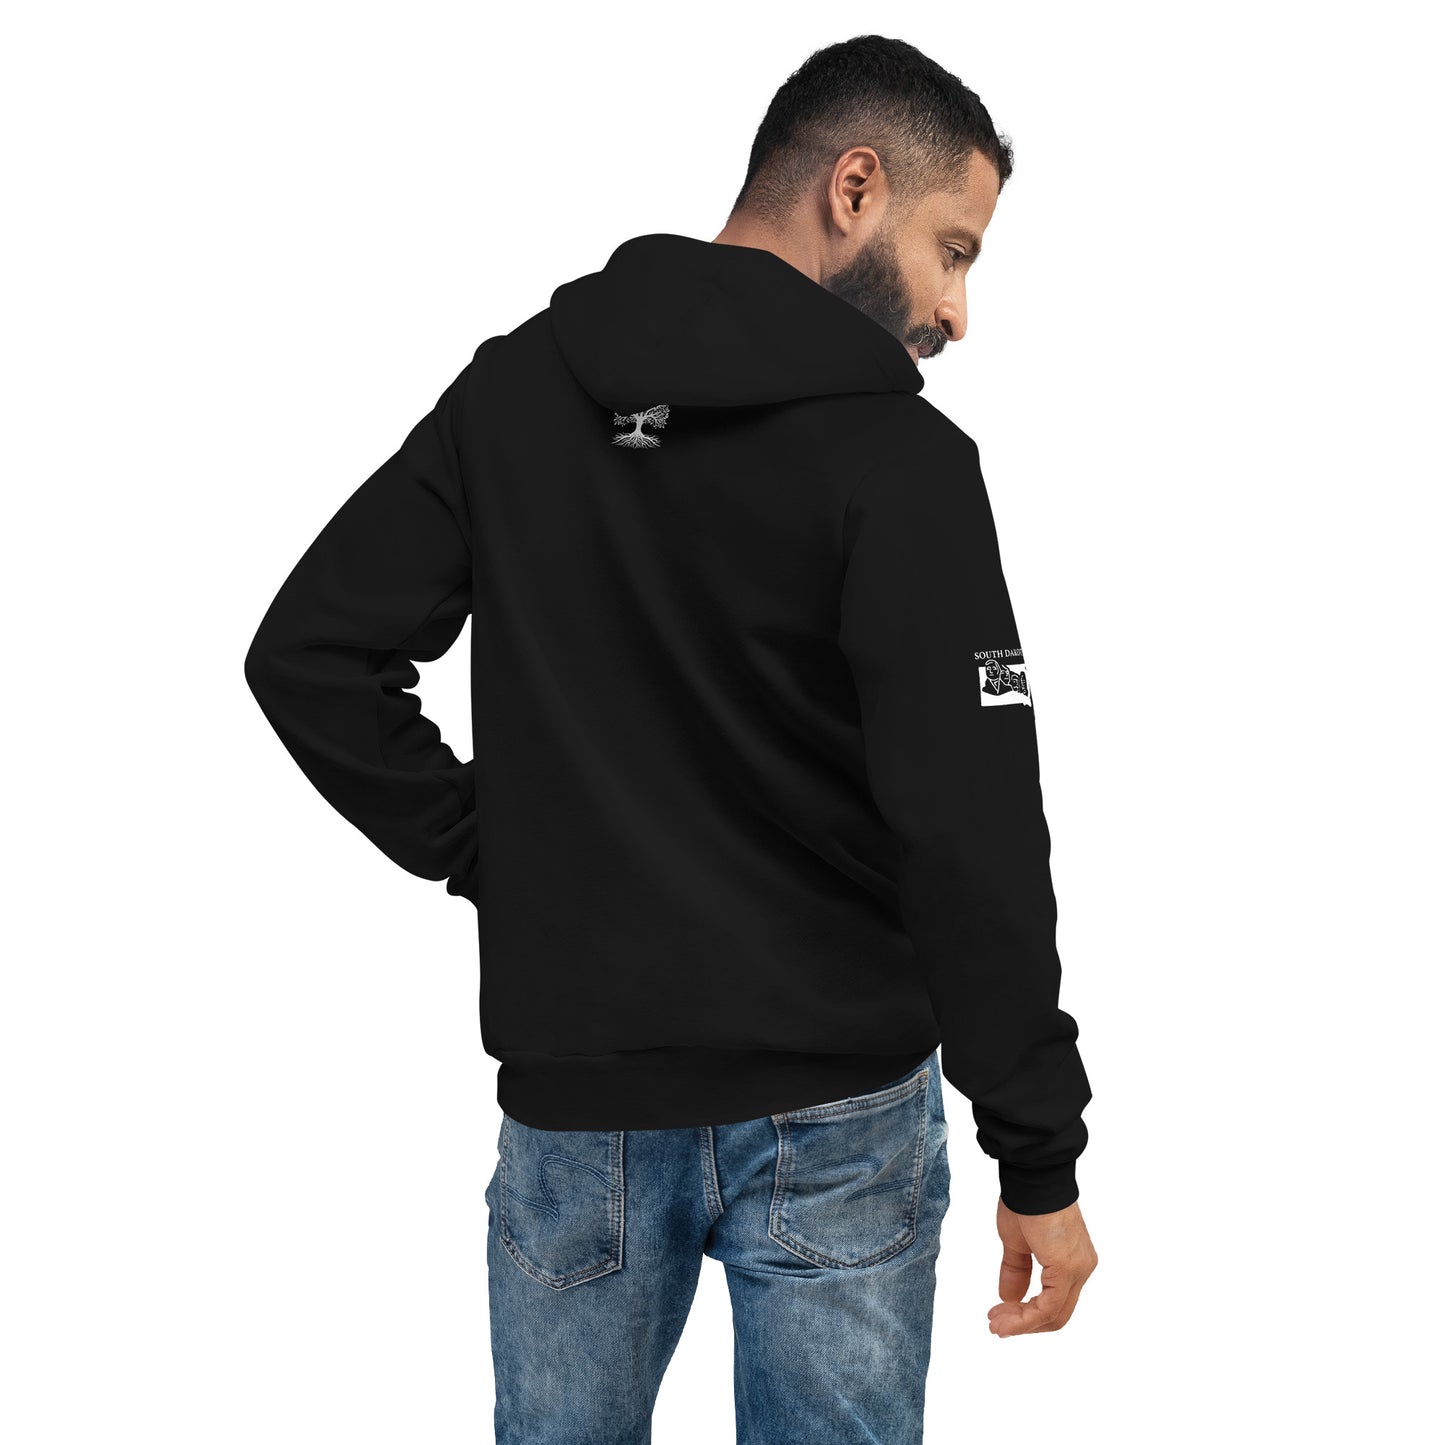 Unisex hoodie - SD (South Dakota)